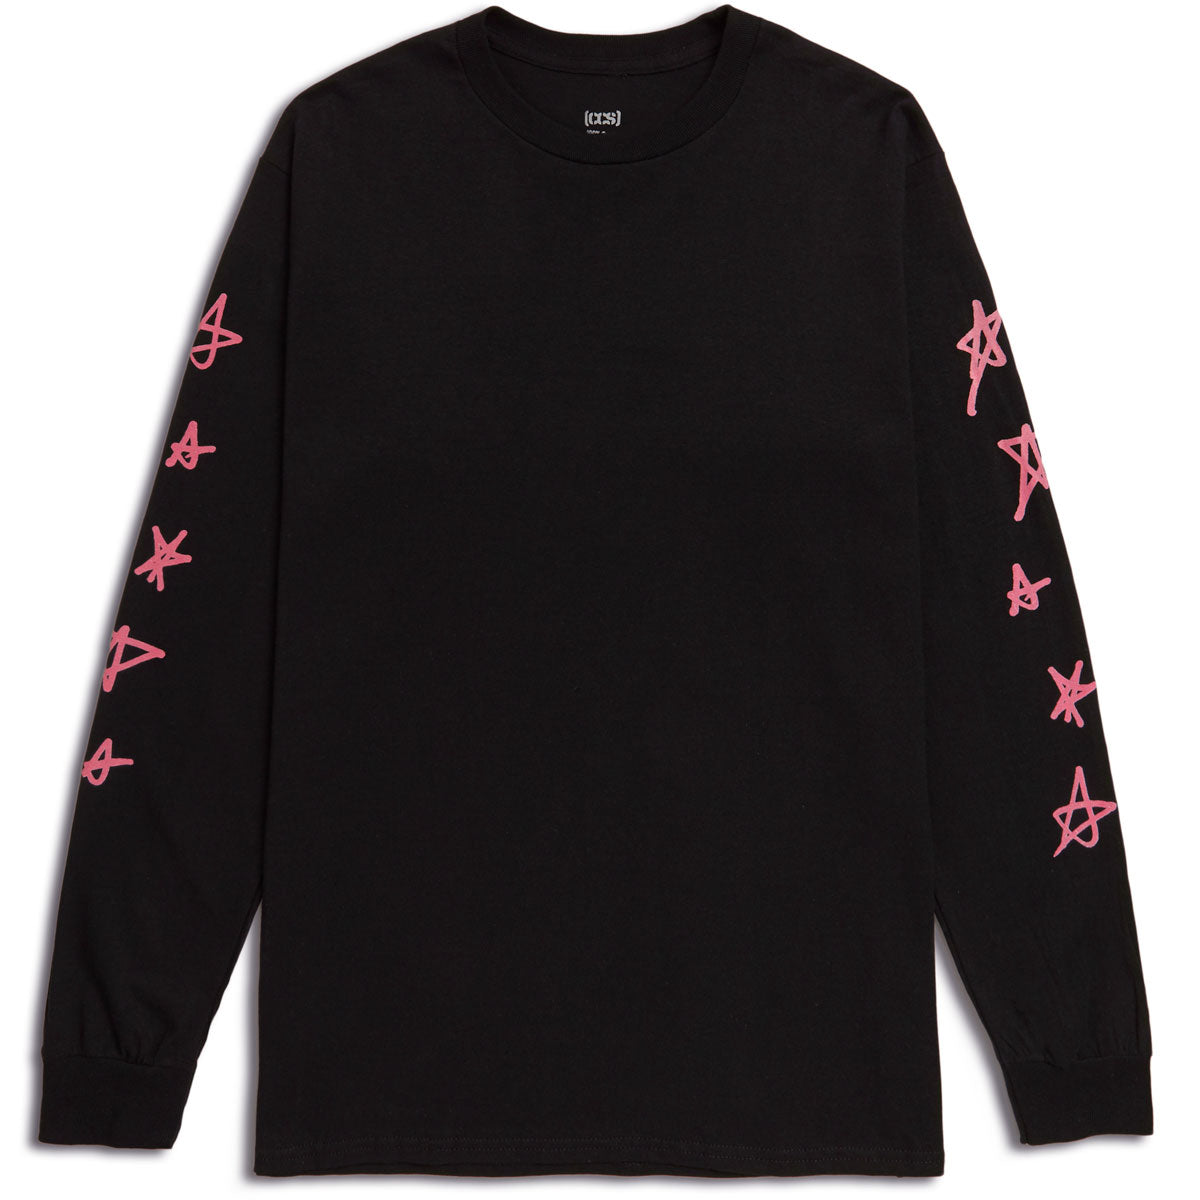 CCS Stars Long Sleeve T-Shirt - Black/Pink - MD image 1